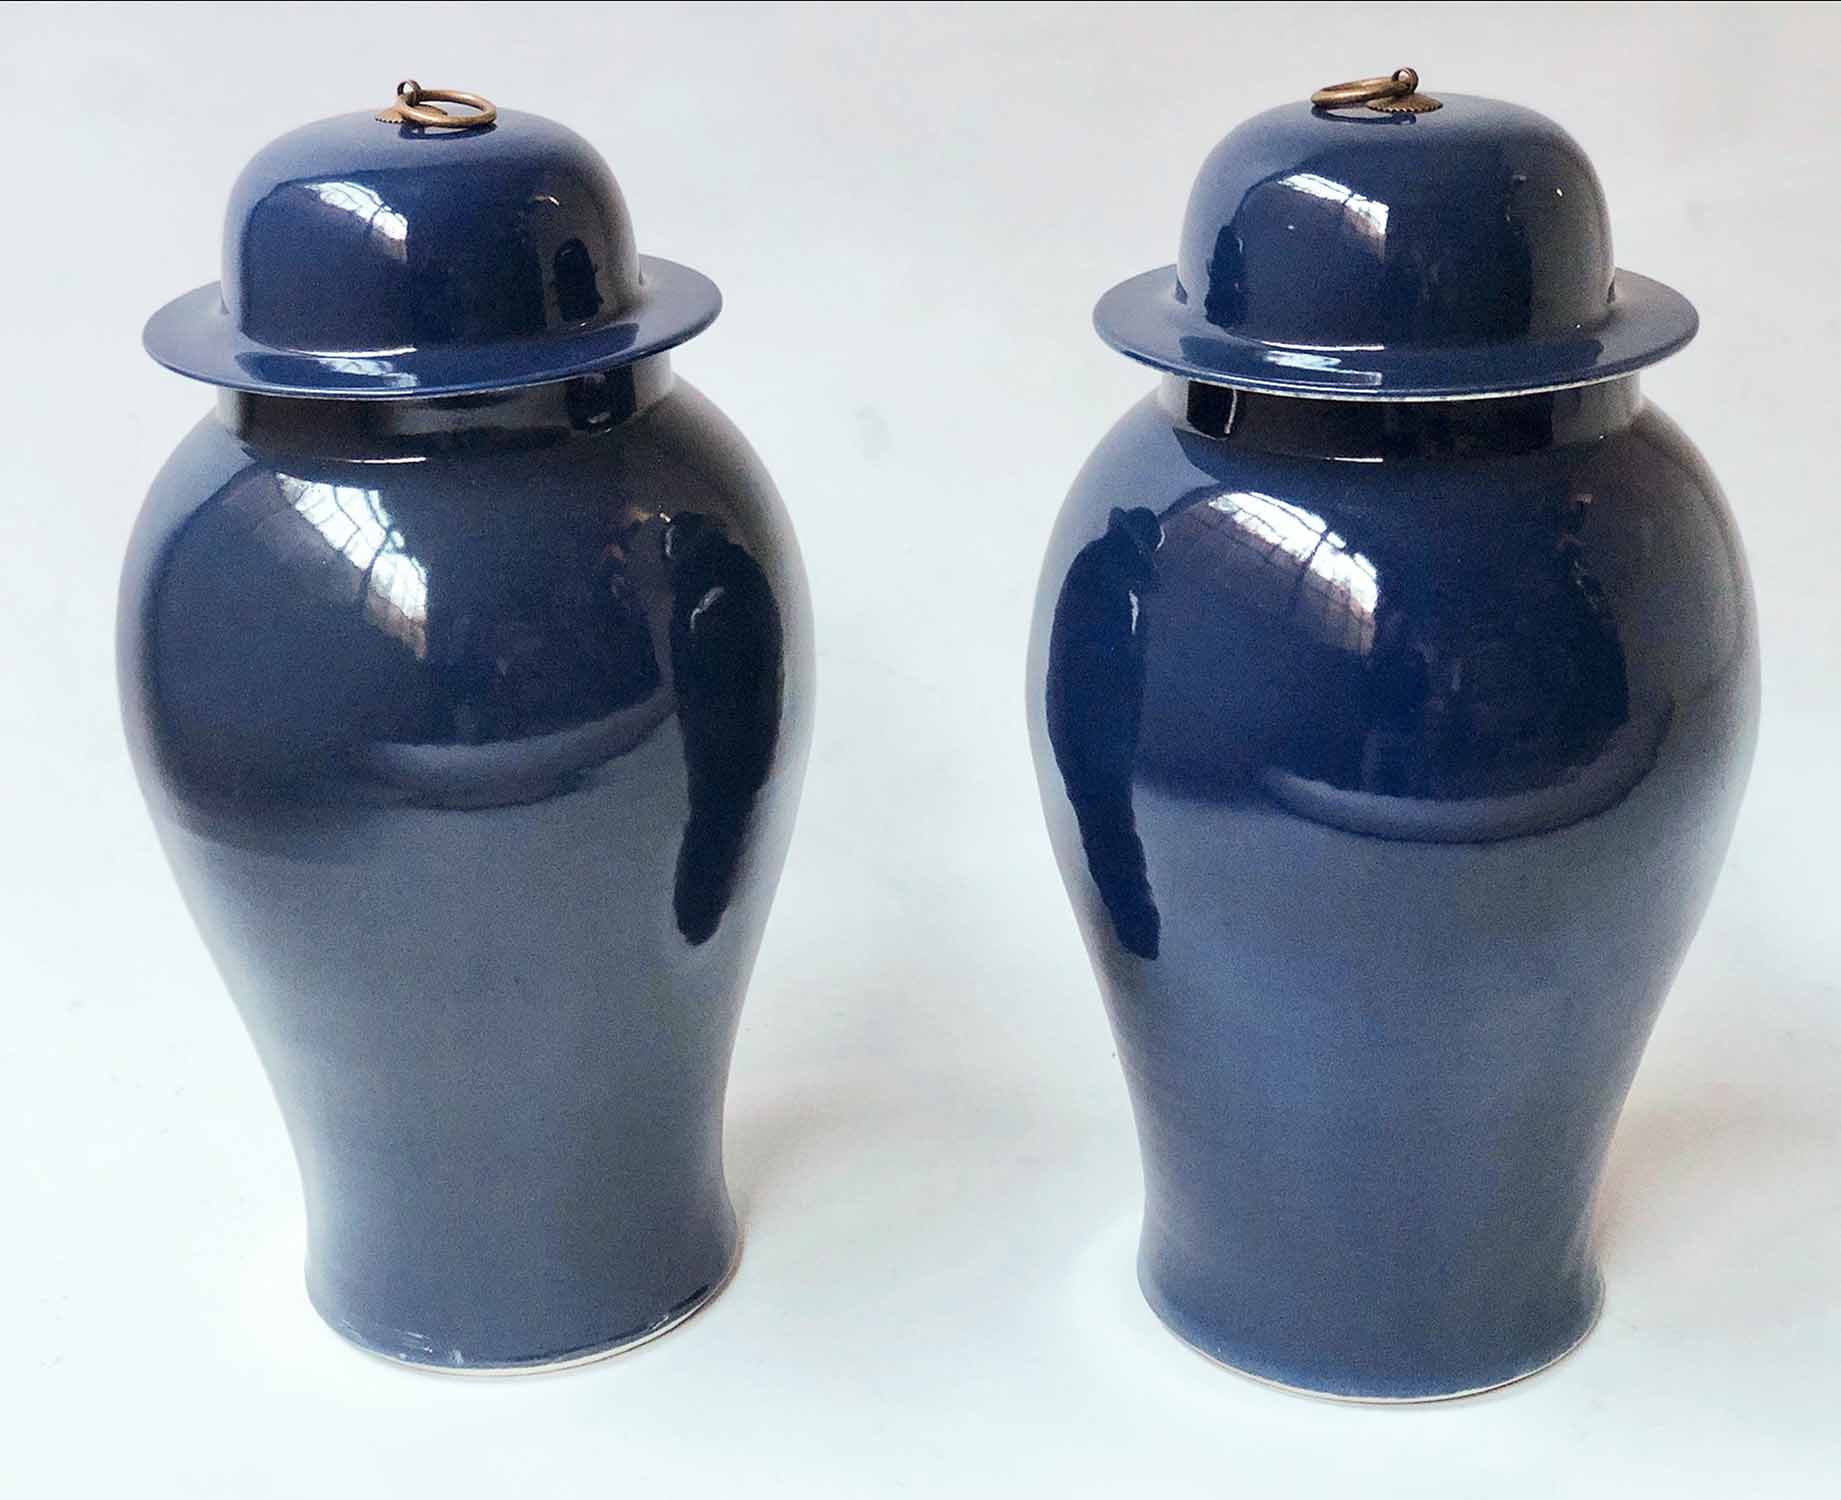 TEMPLE JARS, a pair, Chinese violet blue ceramic ginger jar form with lids, 53cm H.